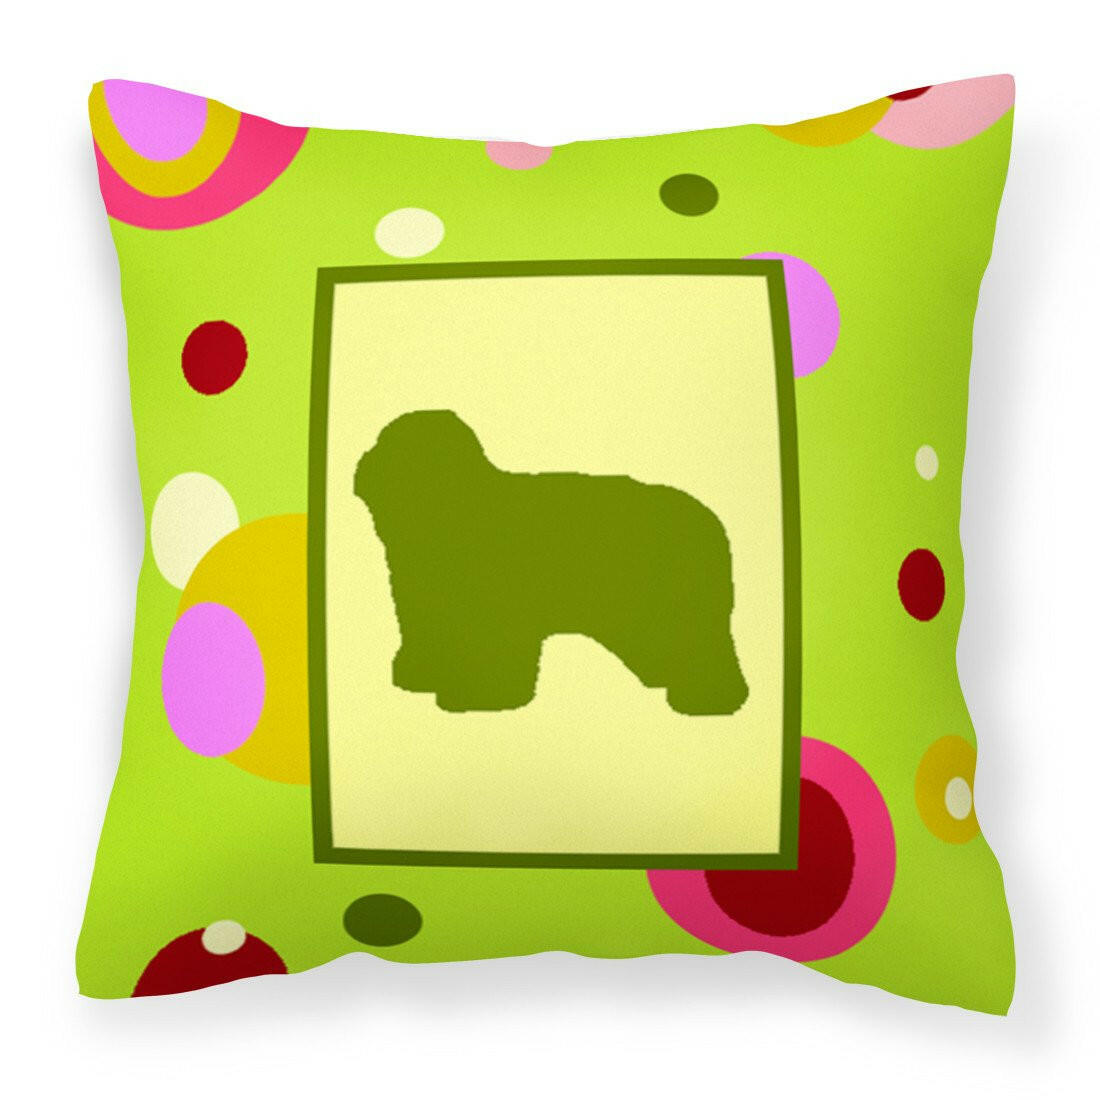 Lime Green Dots Polish Lowland Sheepdog Fabric Decorative Pillow CK1144PW1414 by Caroline's Treasures